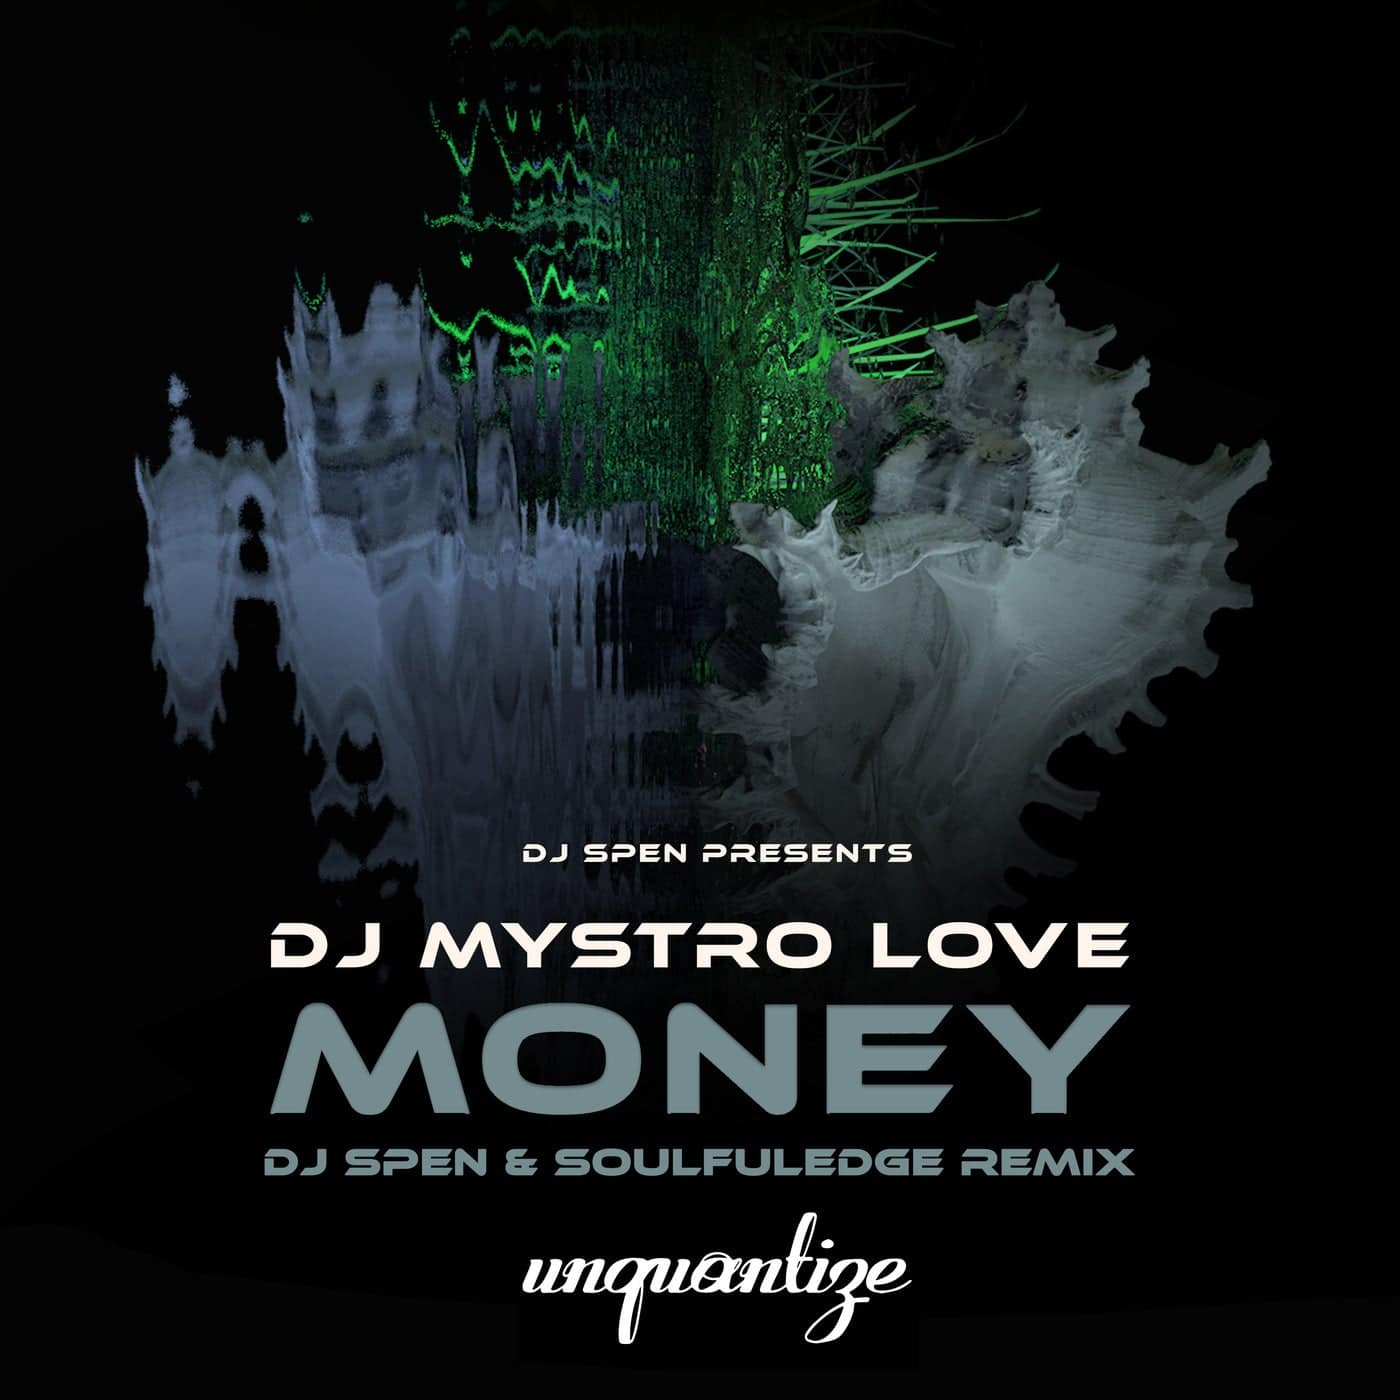 Download Money (The DJ Spen & Soulfuledge Remix) on Electrobuzz